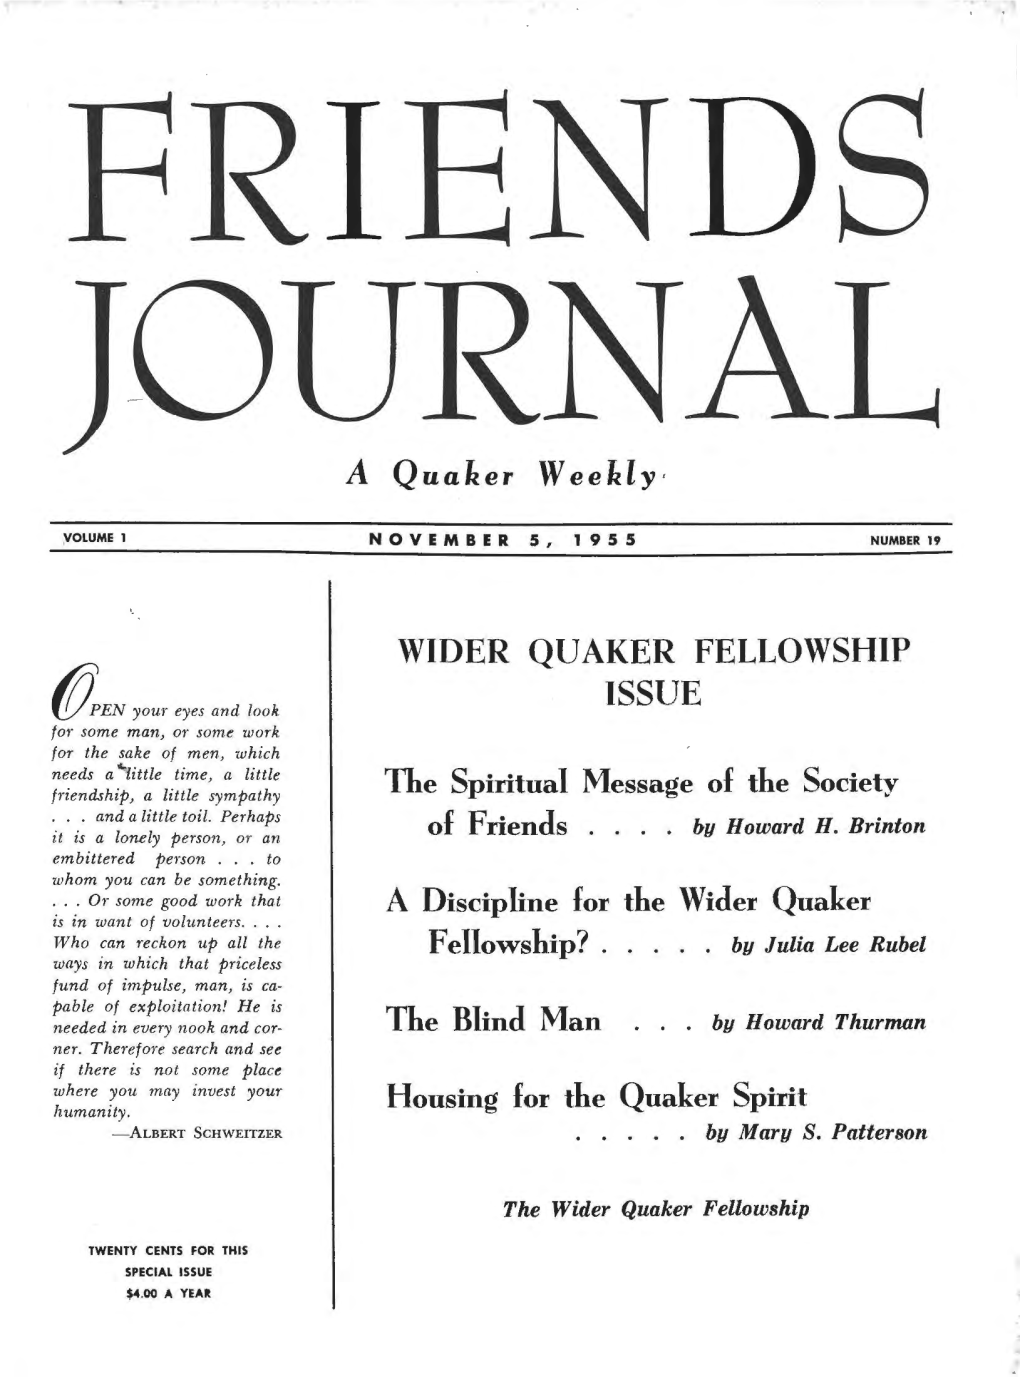 The Wider Quaker Fellowship